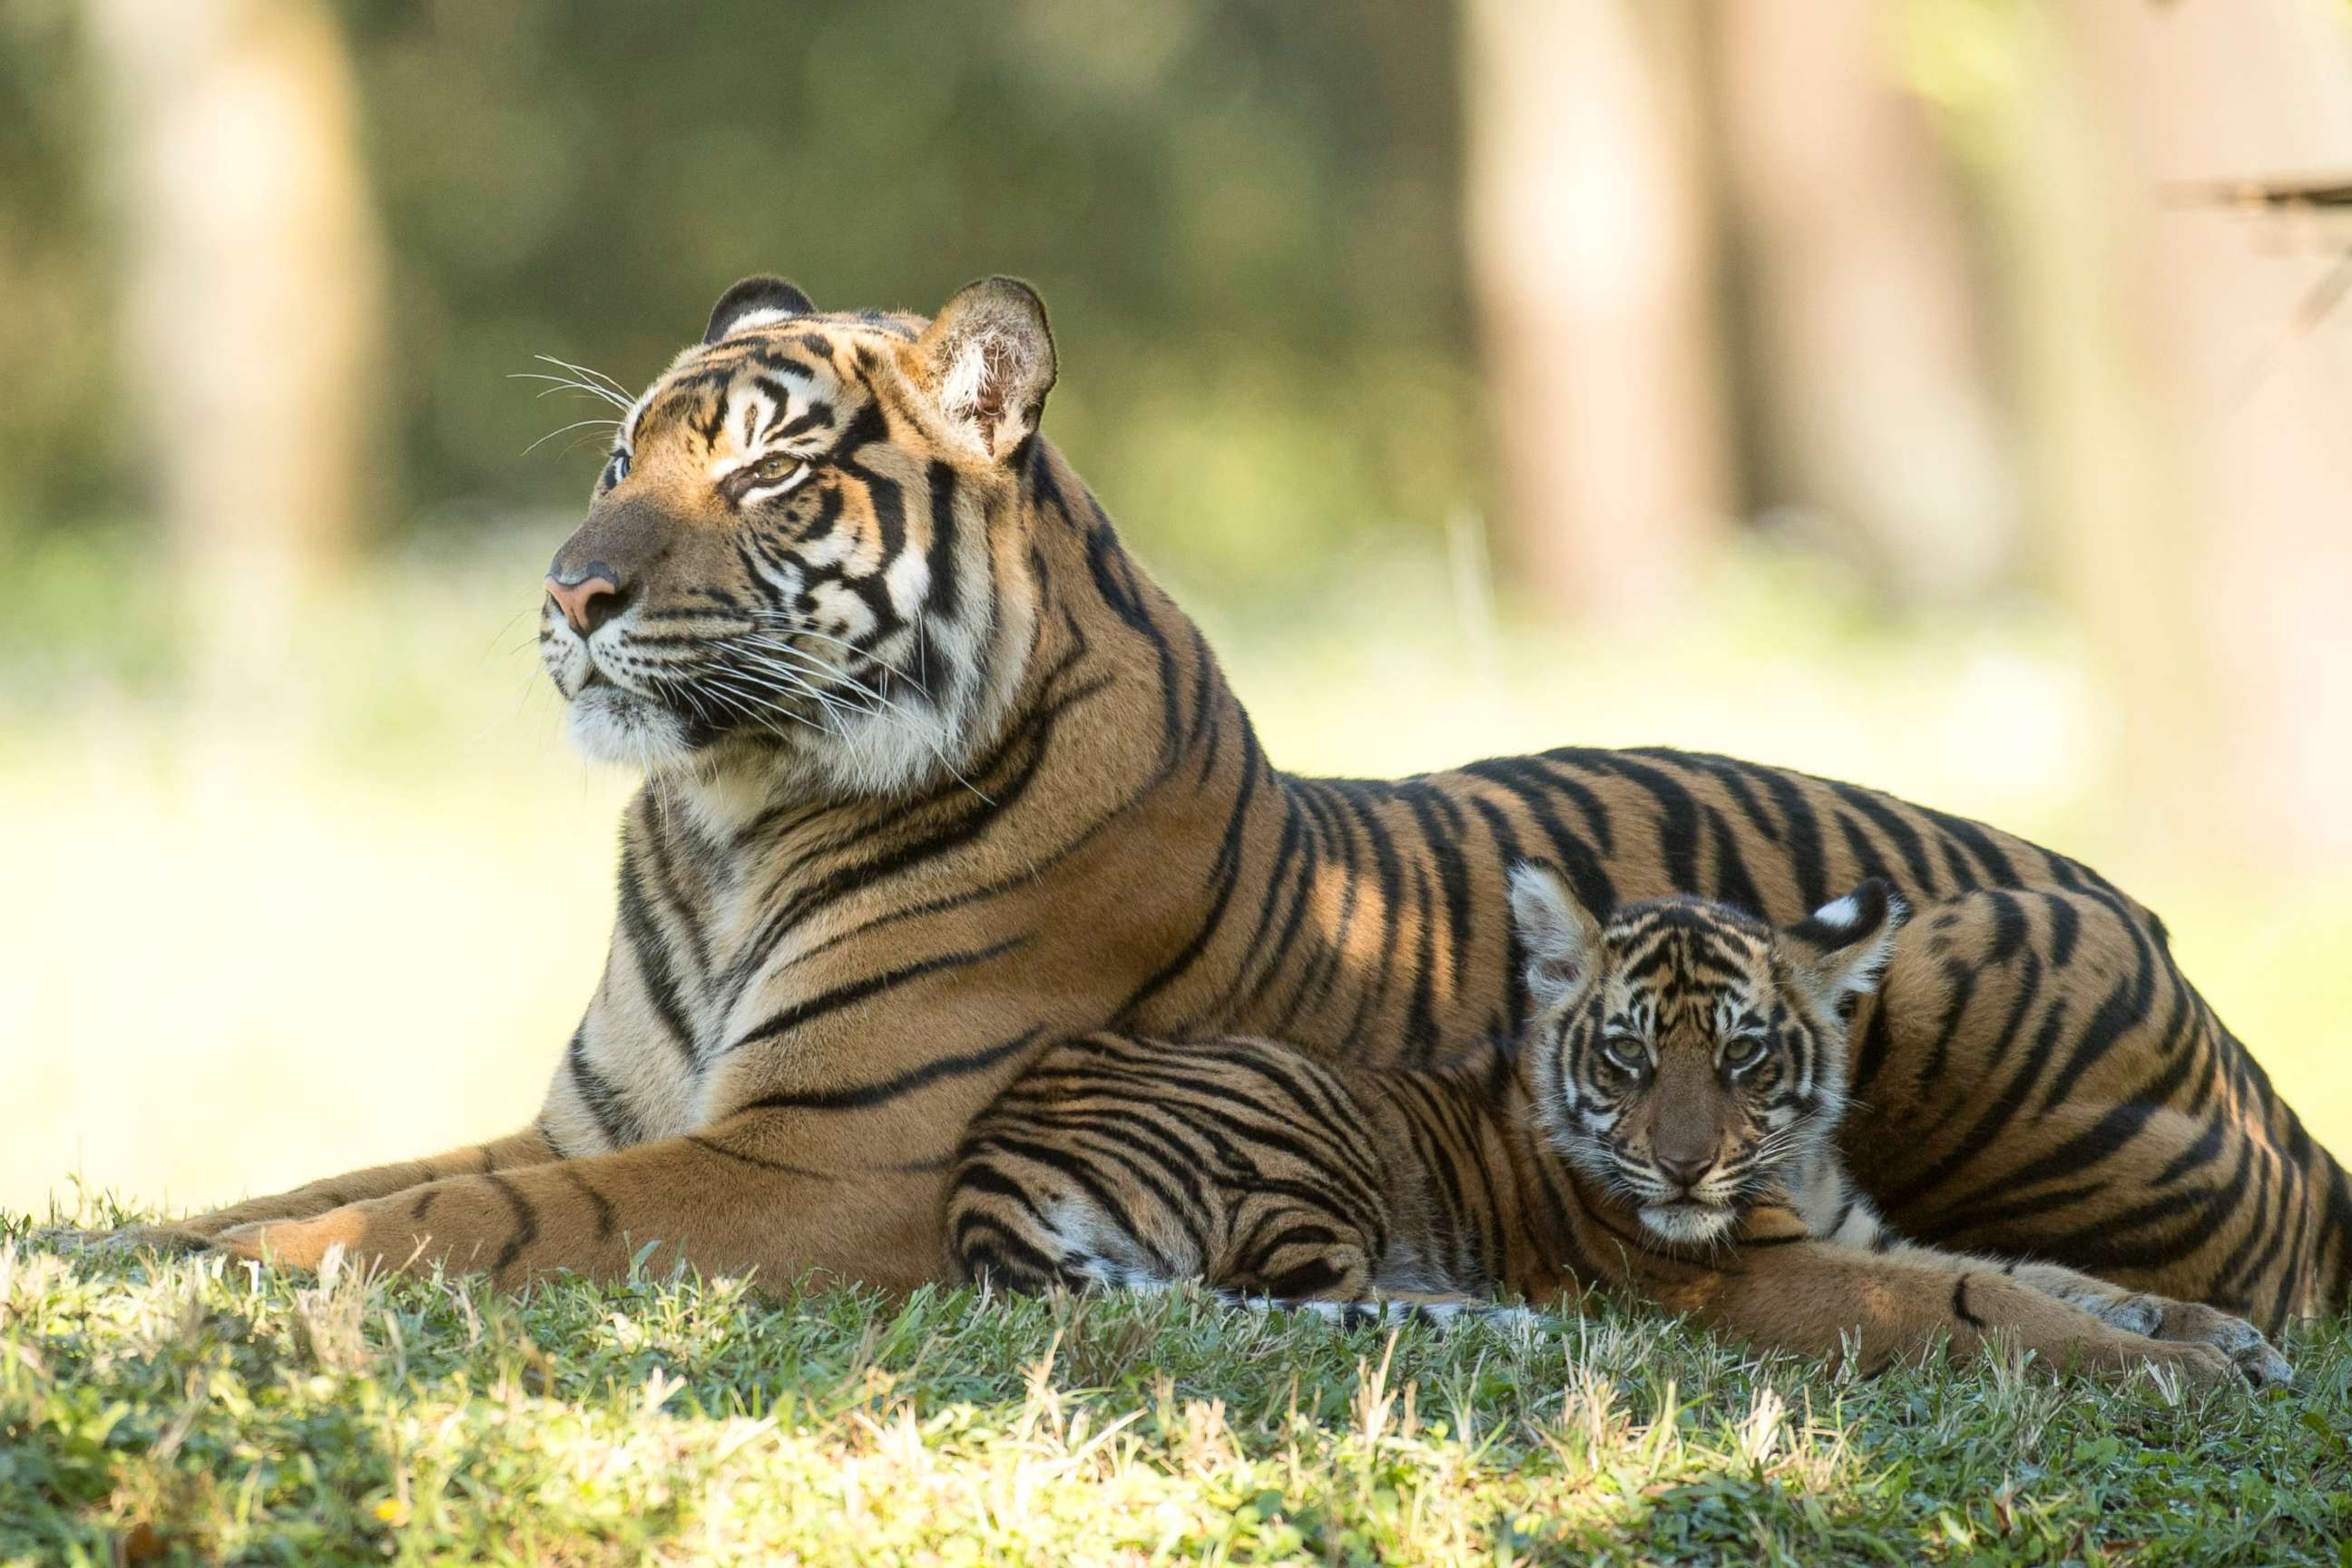 PHOTO: Jeda and Anala are the first tigers ever born at Walt Disney World's Animal Kingdom.